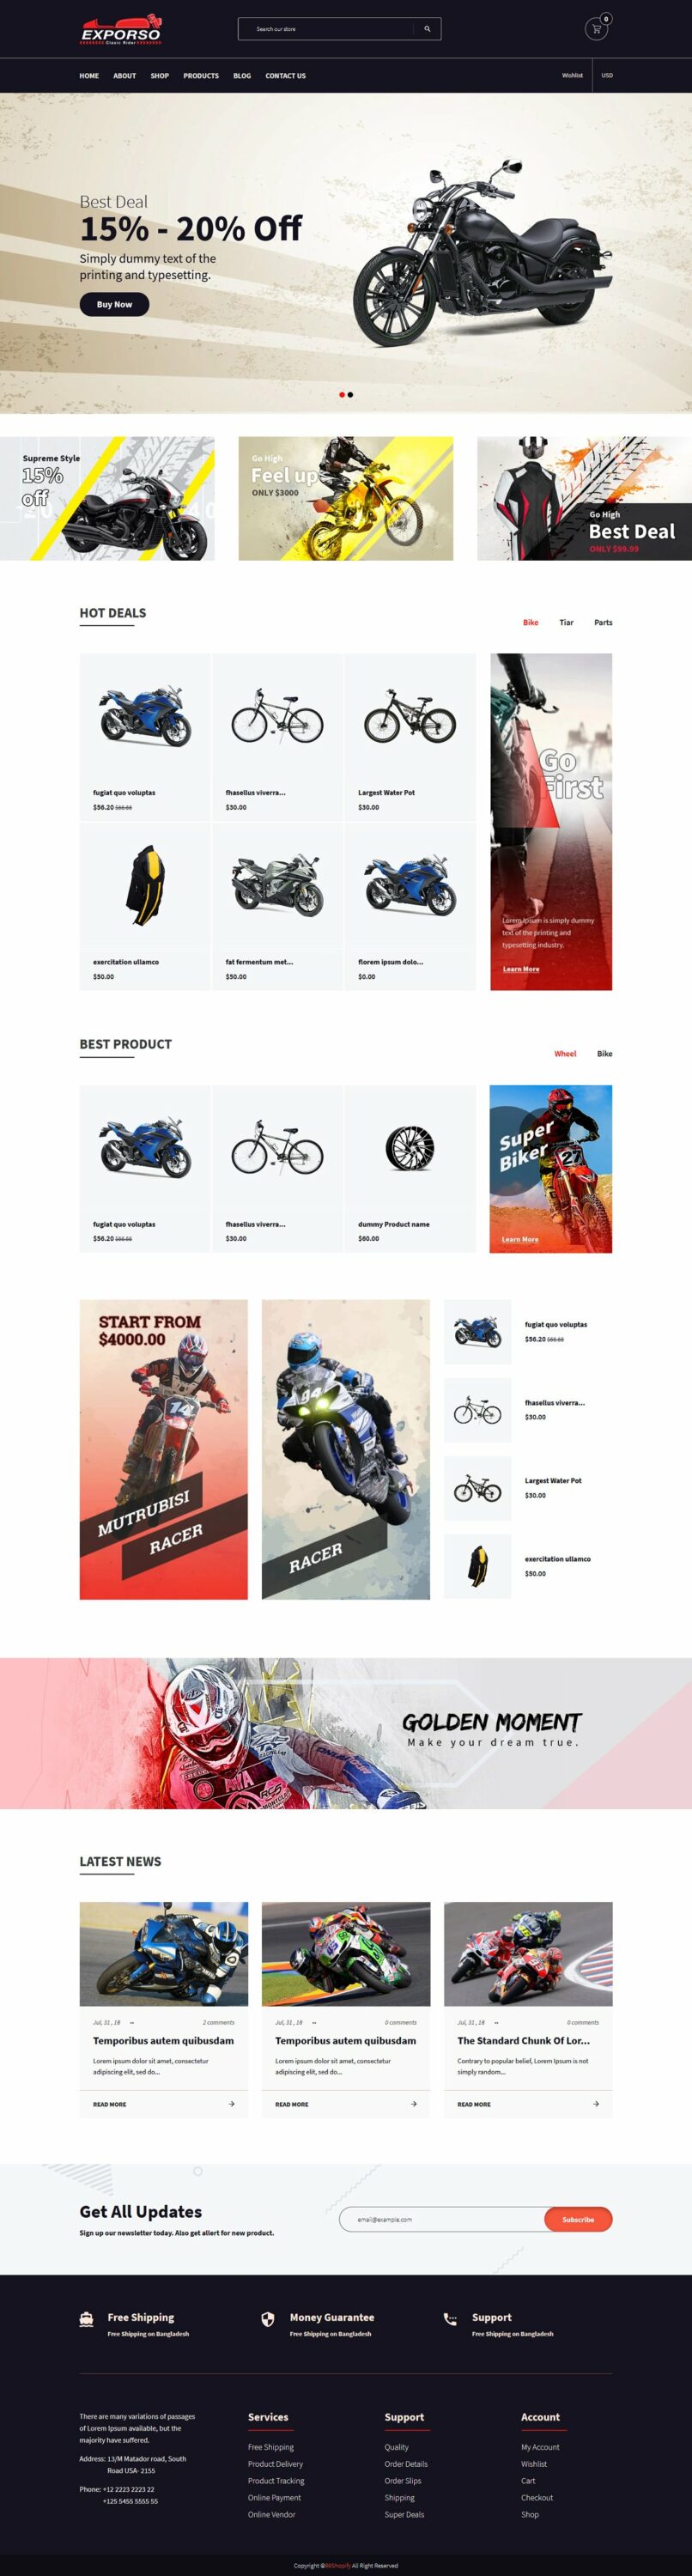 Image of motorcycle sales sideboard template.